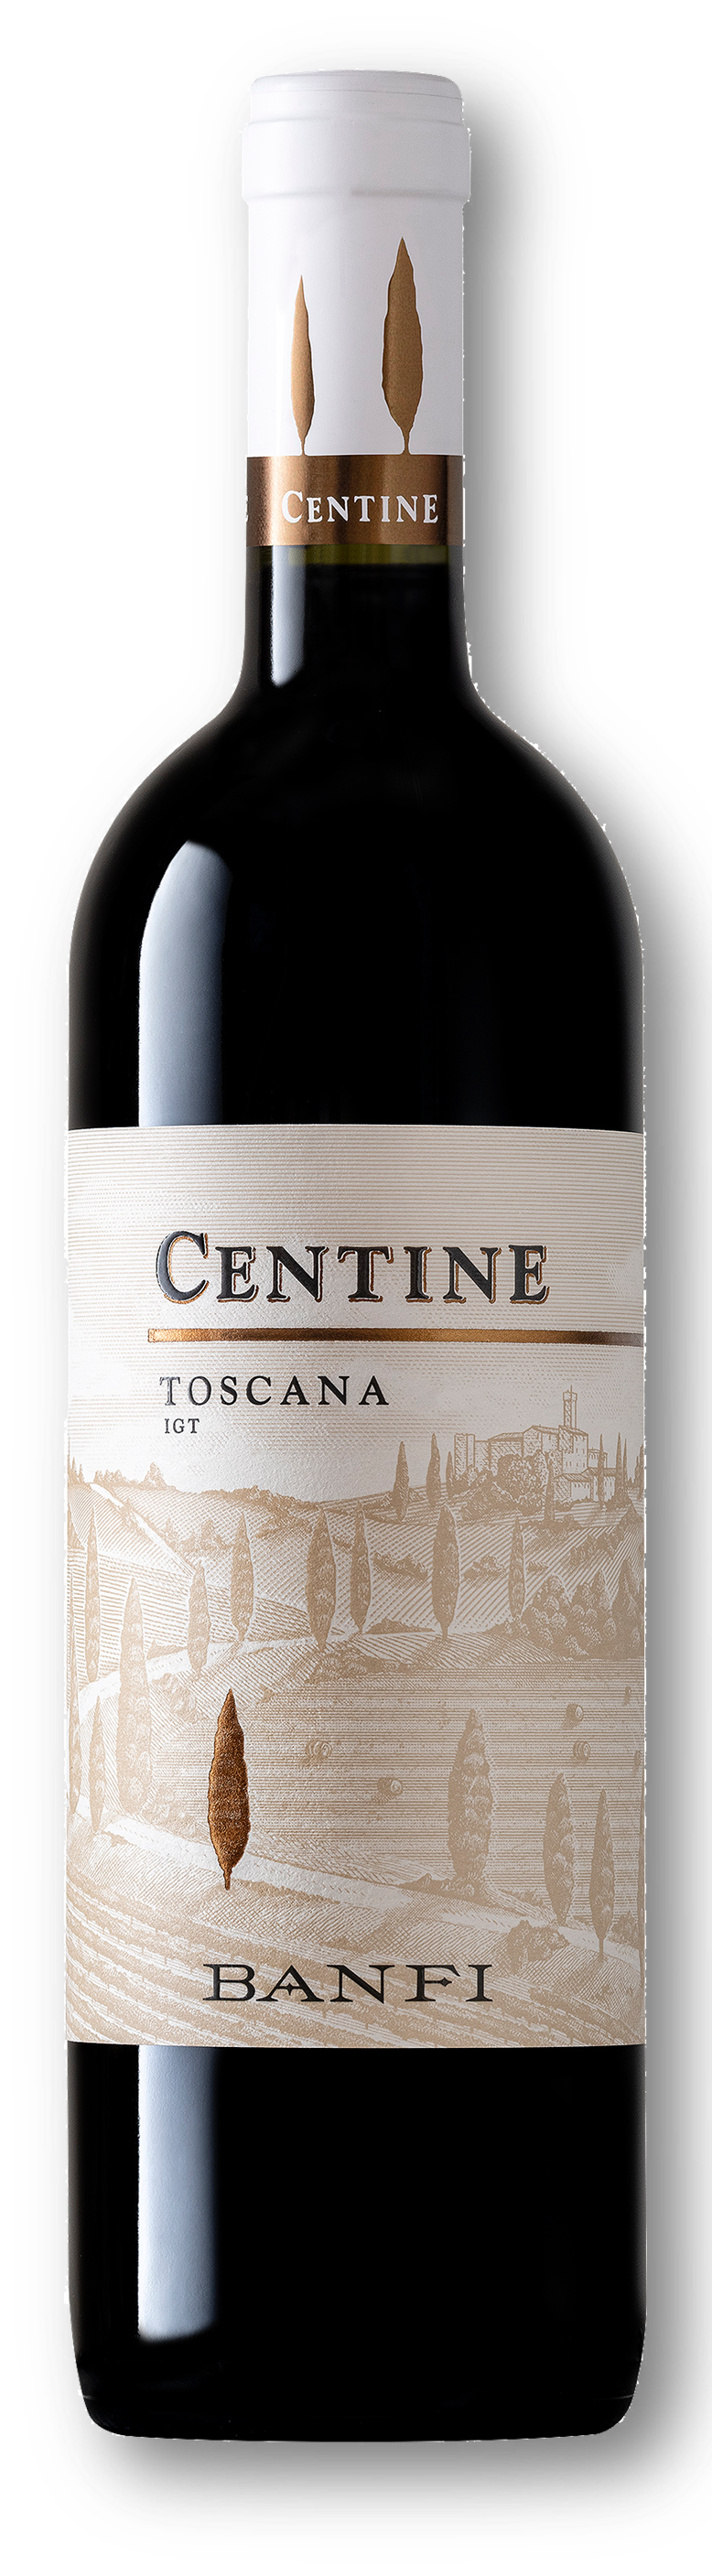 Centine Rosso Toscana IGT 0,75l 13,5% - 2018 | Banfi - Rotwein aus Toskana